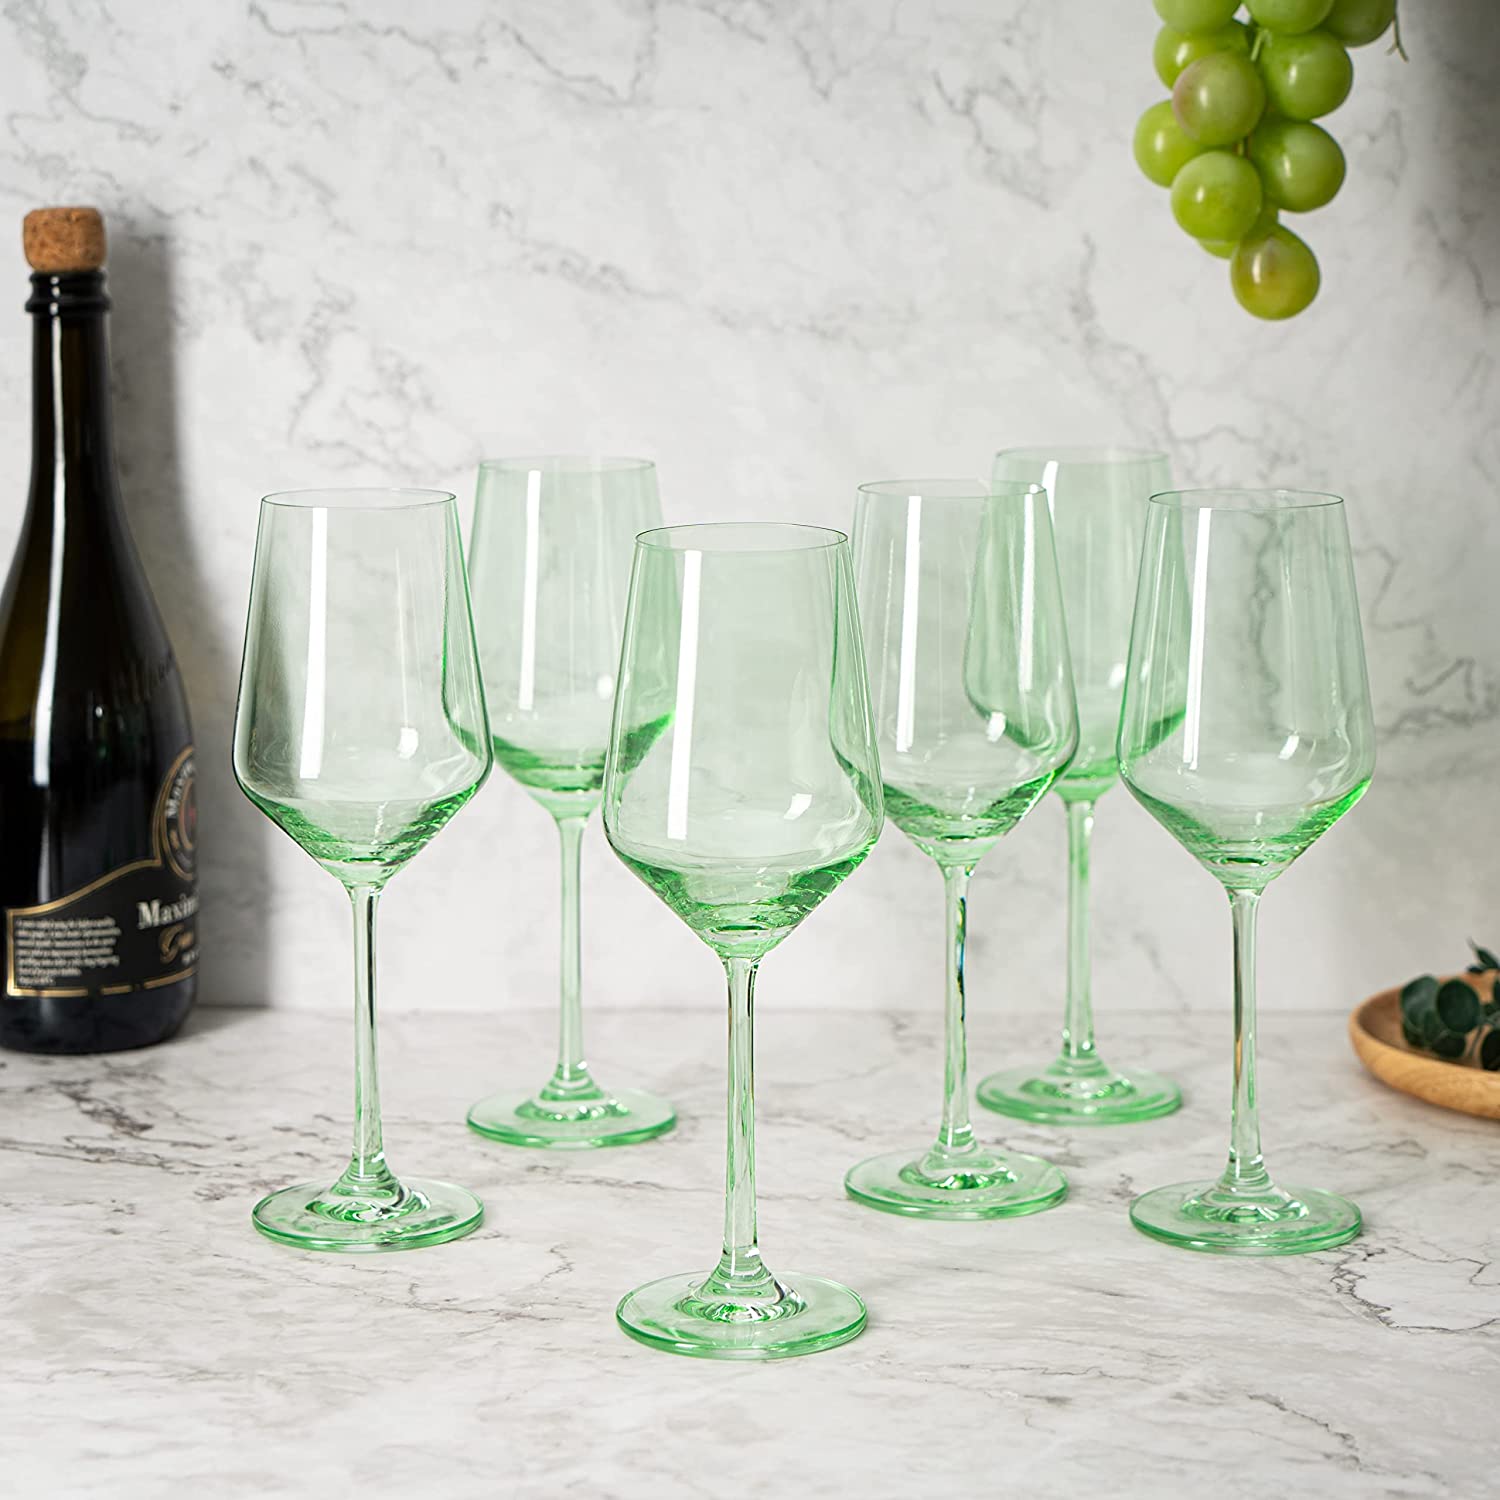 Swoon Live Edge Walnut Set - with 4 Wine Glasses (12 oz